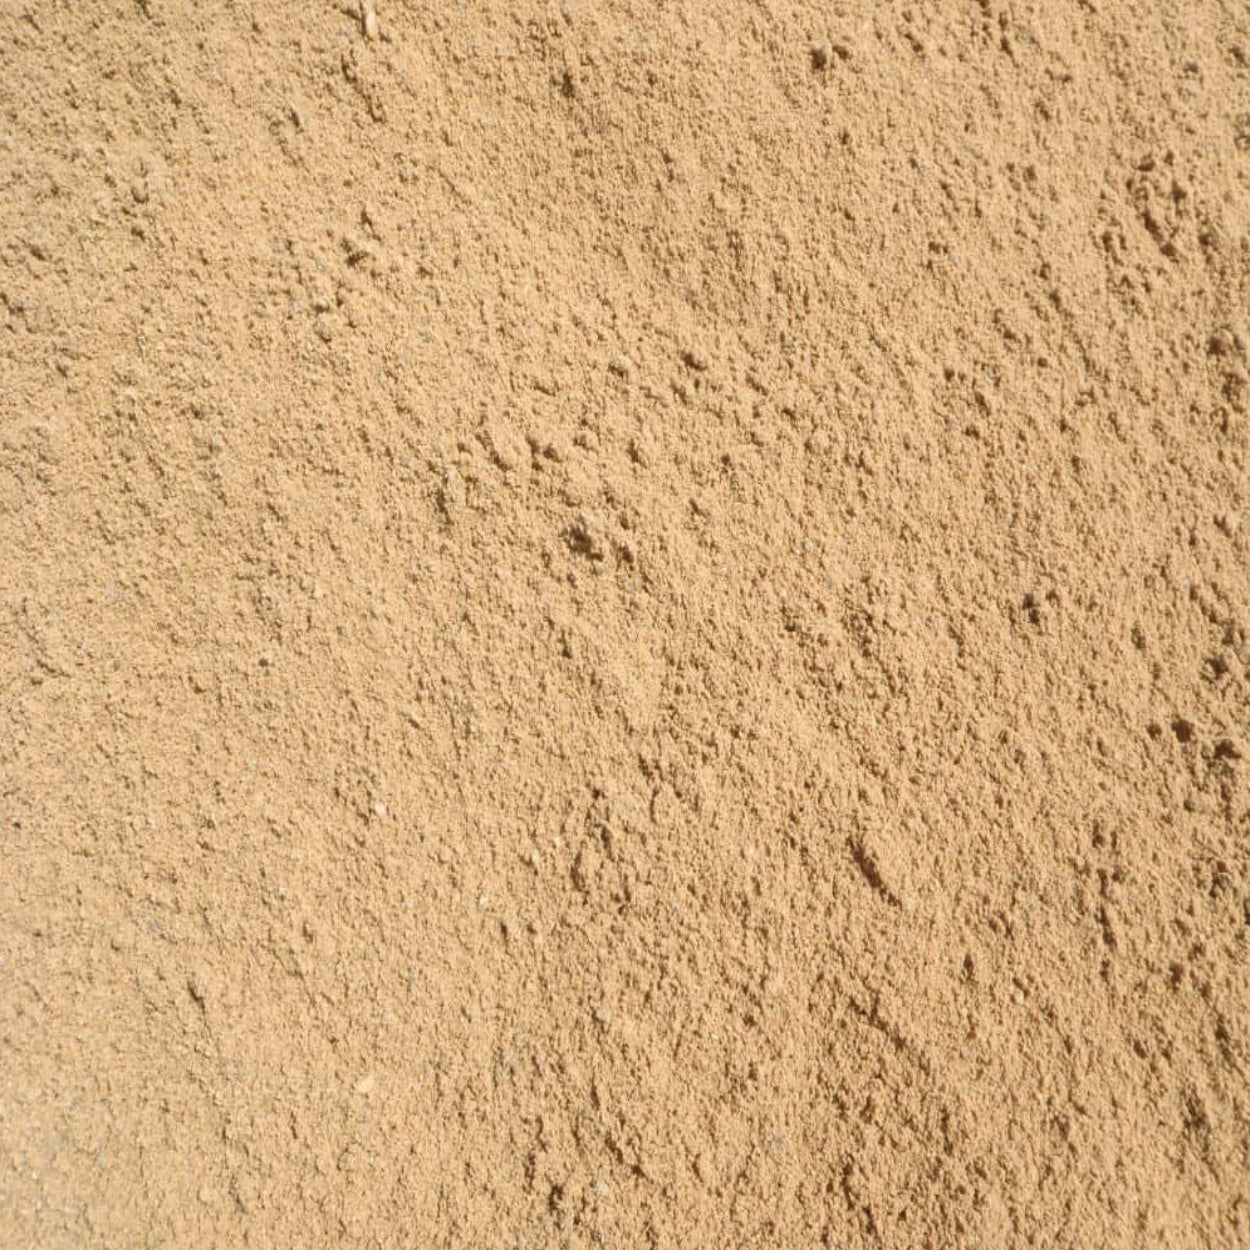 Bulk Sand For Sale Online At Superstore Route 202 Landscape Supply.